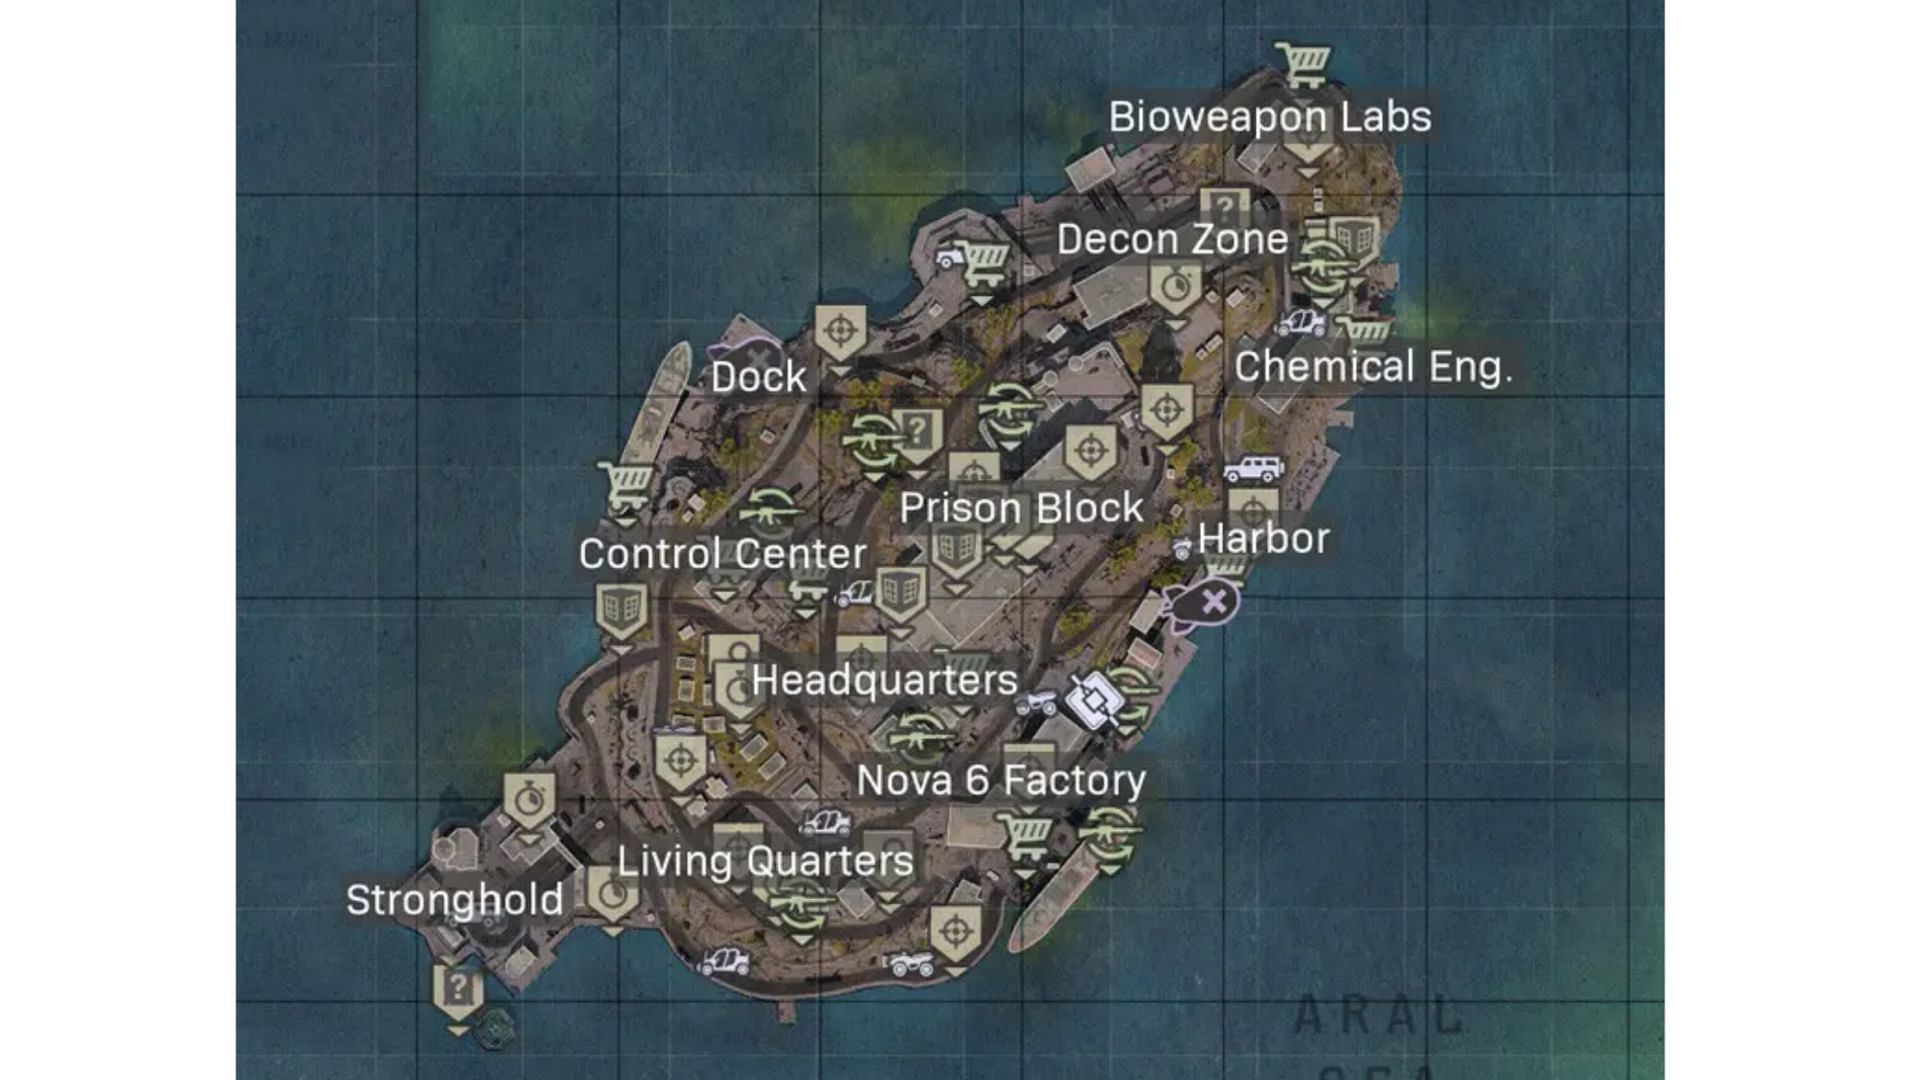 Help you get wins on rebirth island warzone map by Joshuashann